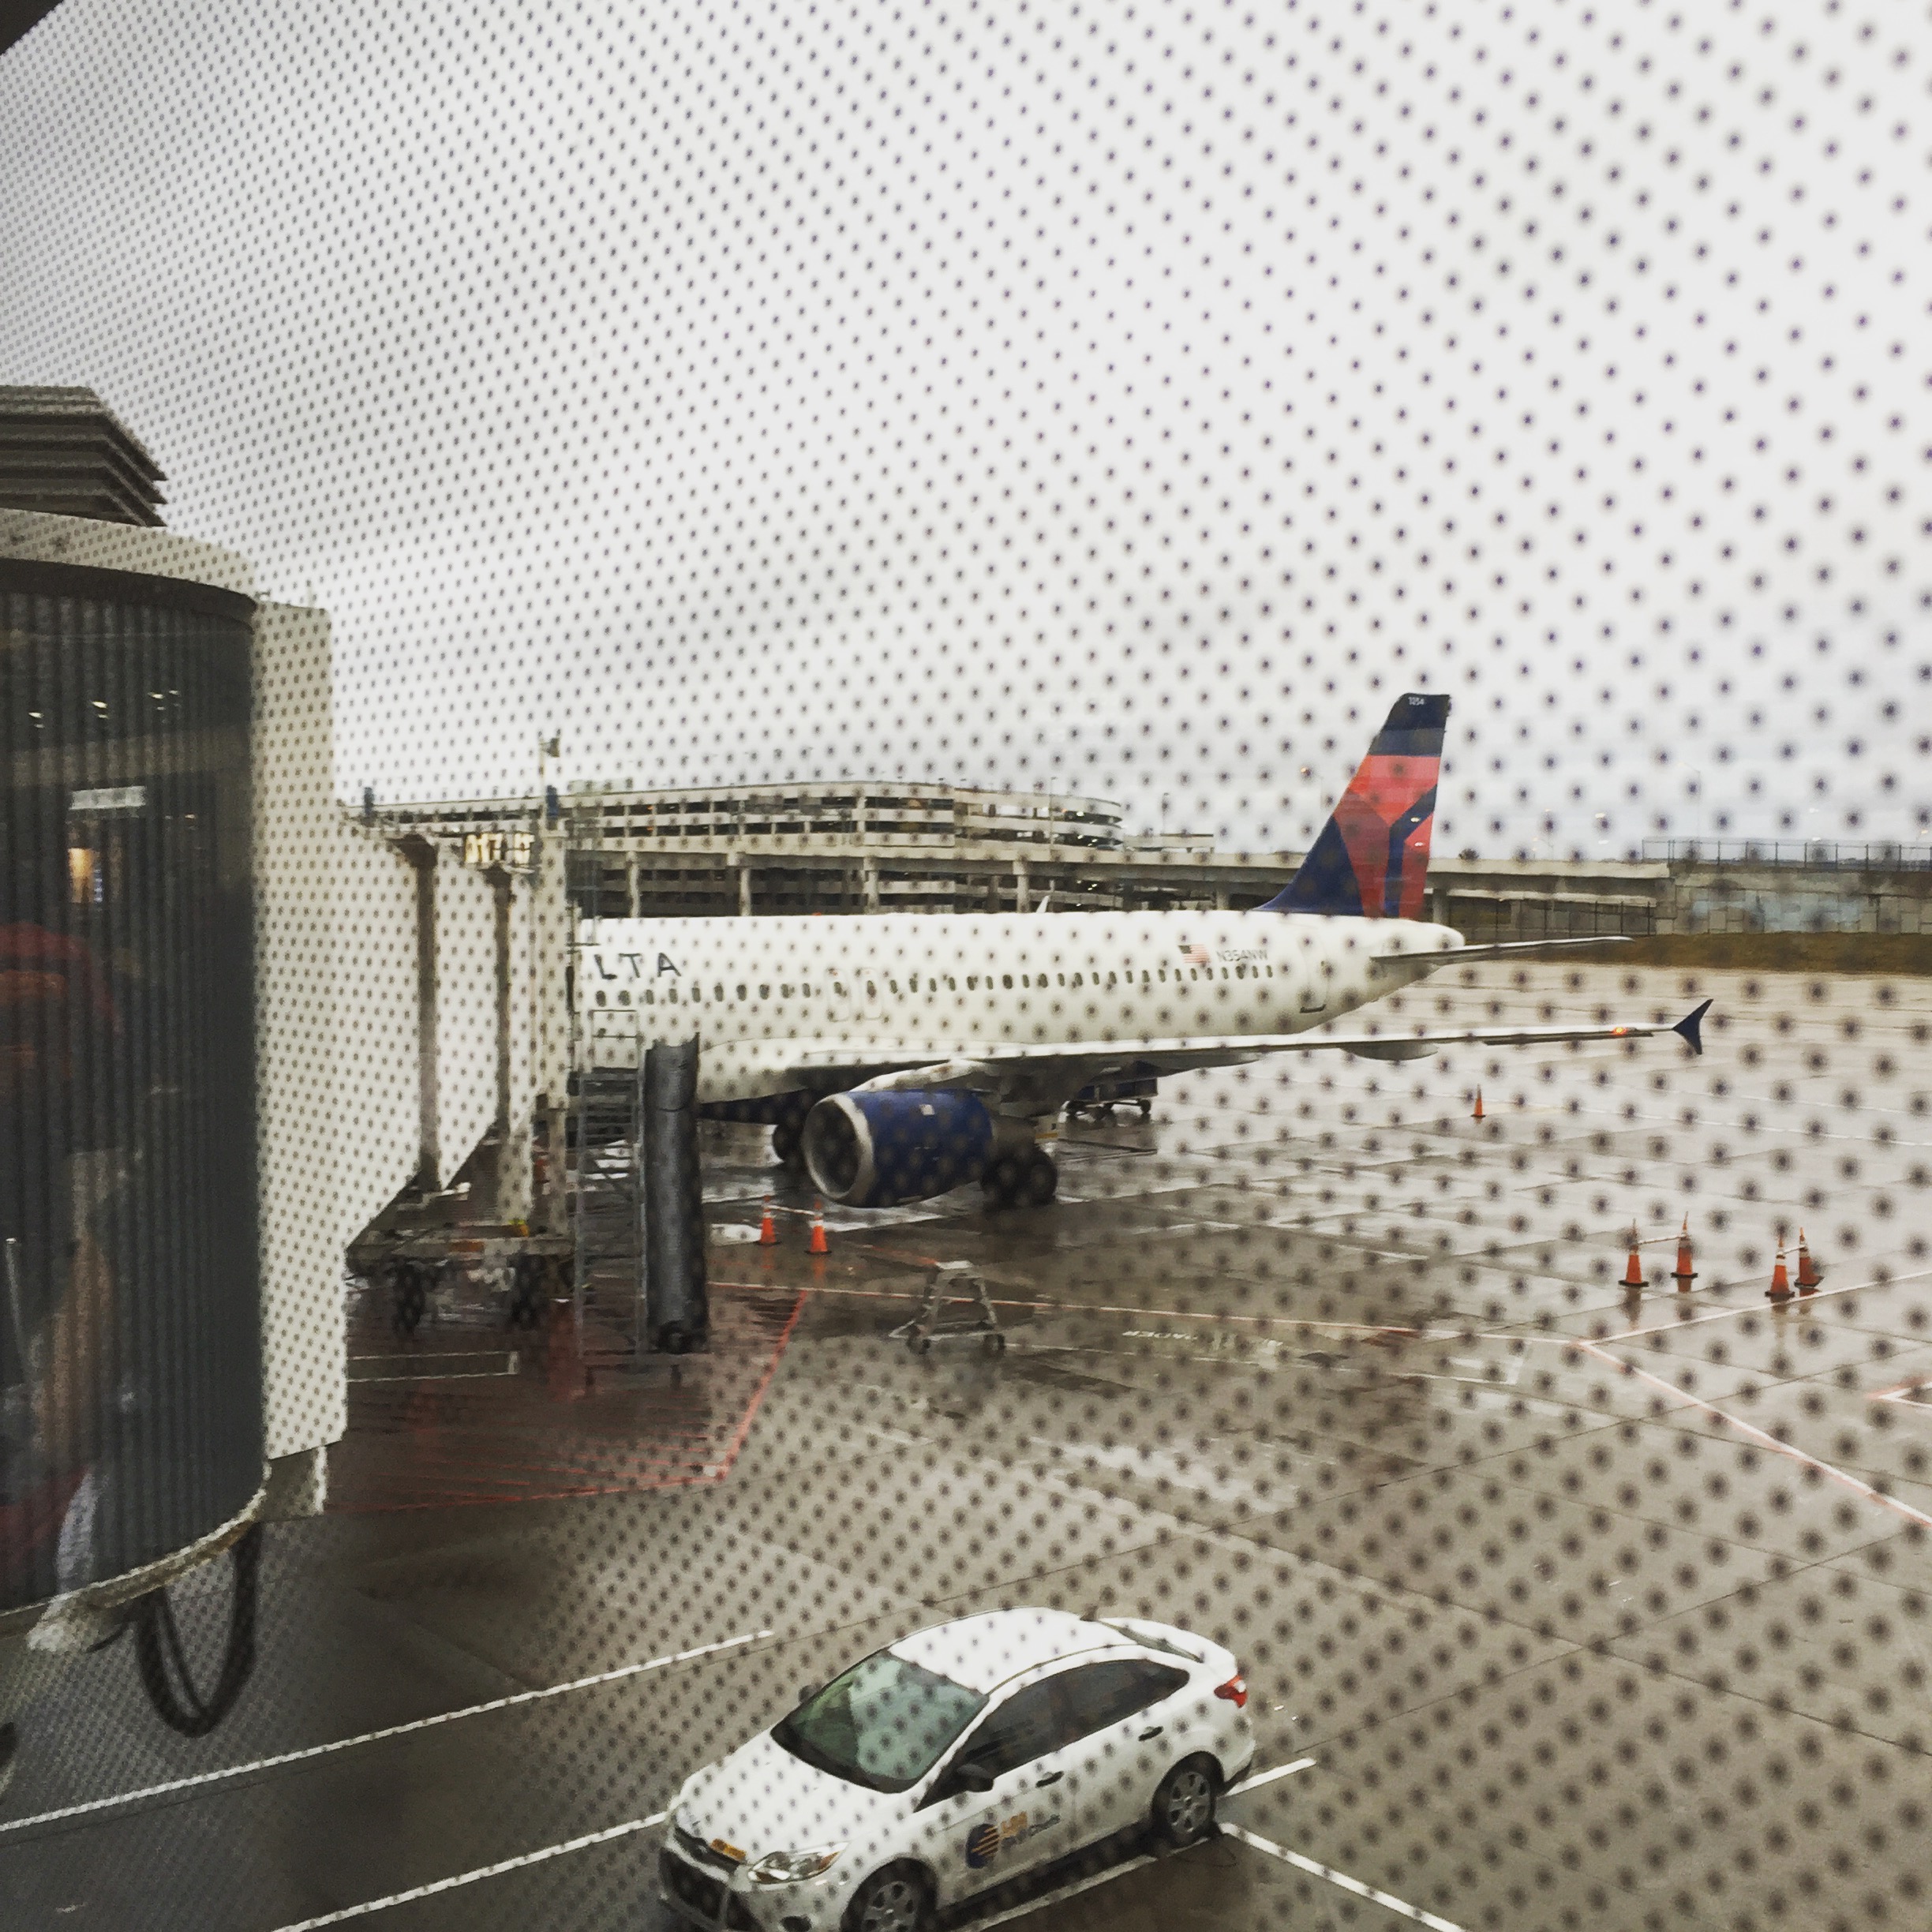 Trip Report – Delta Airlines – Detroit to Minneapolis